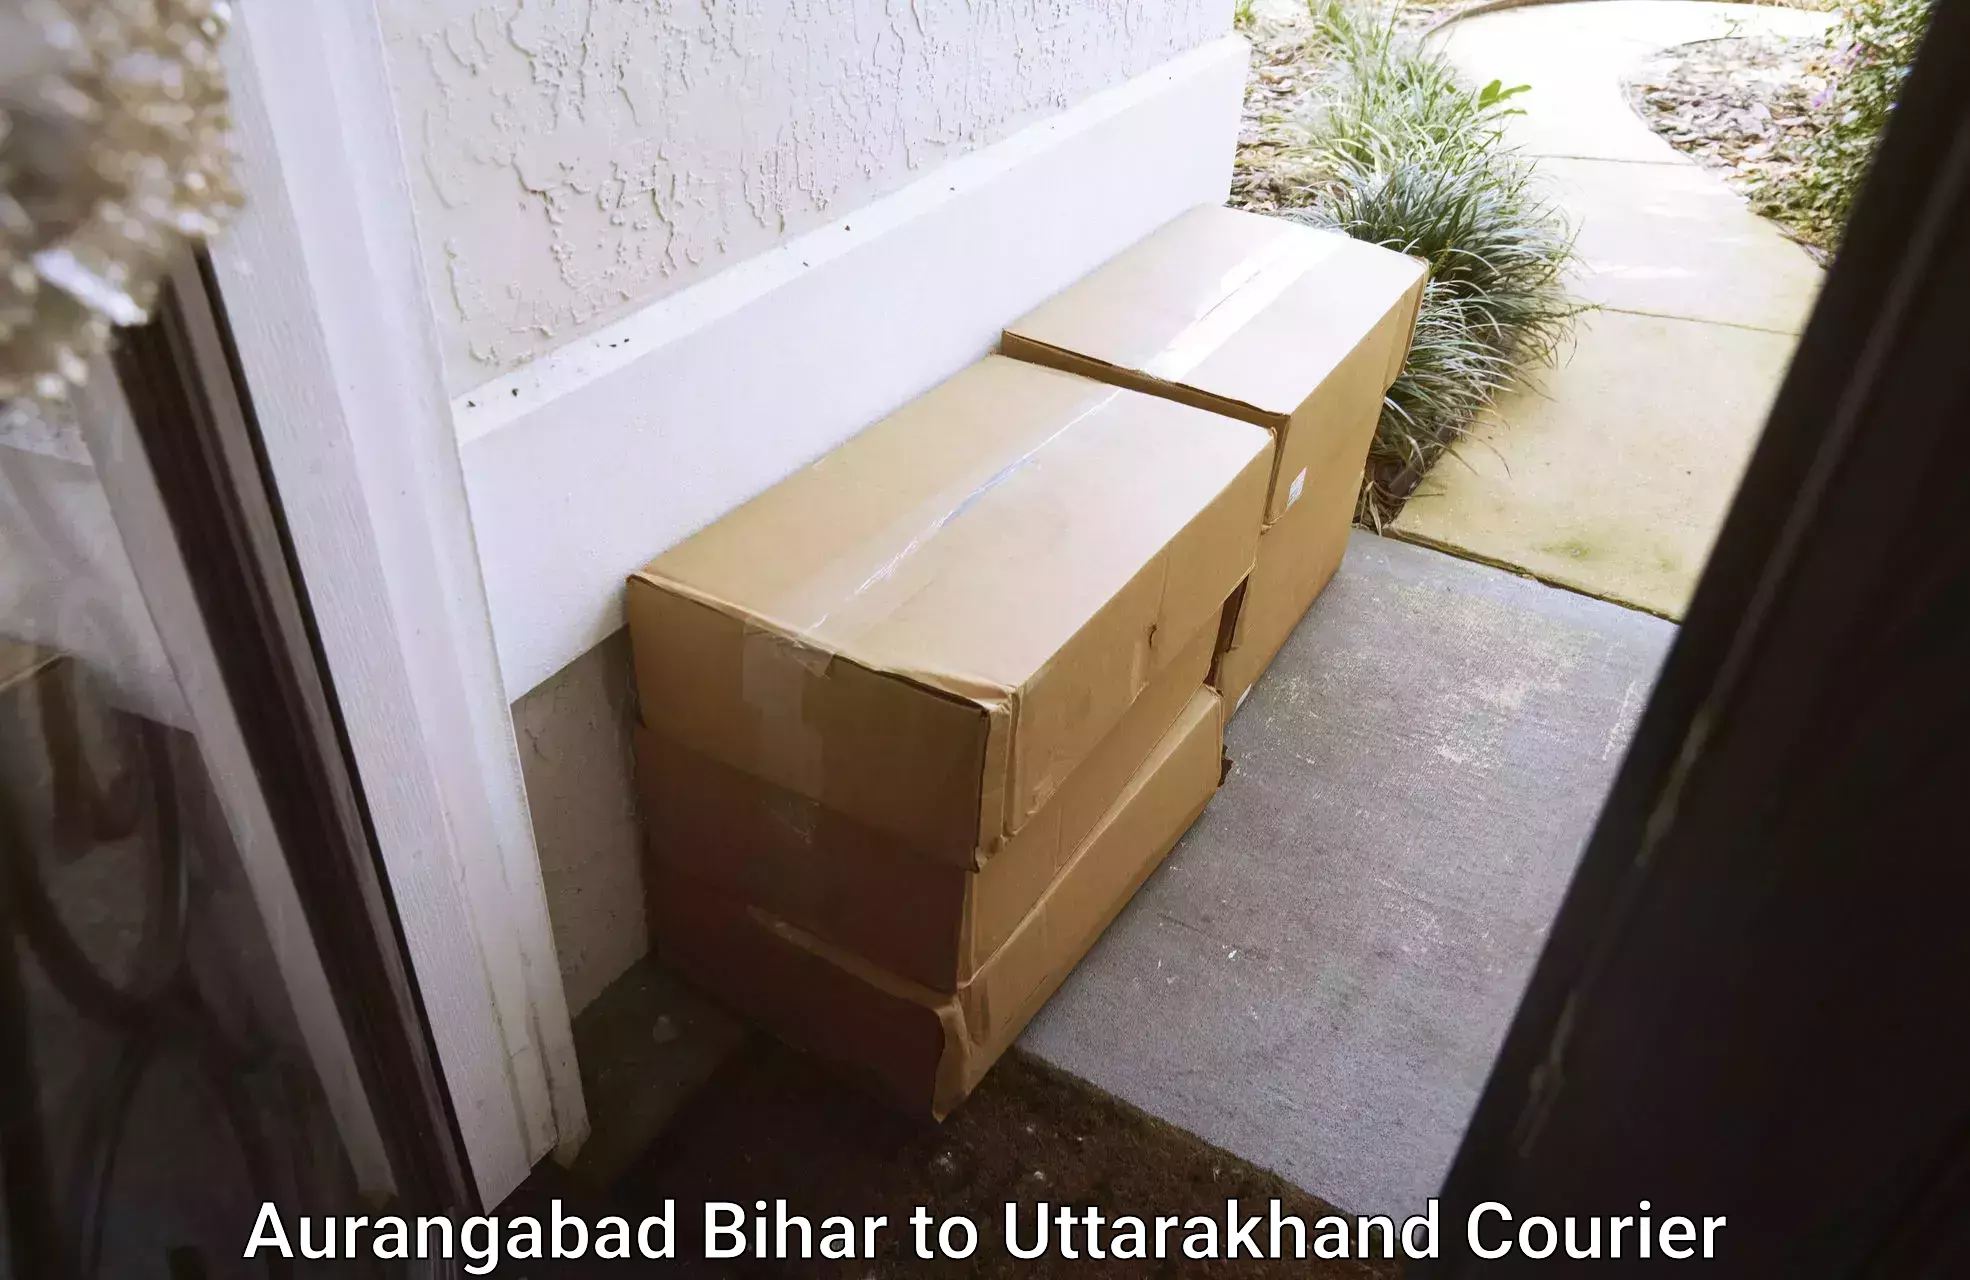 Trusted relocation experts Aurangabad Bihar to Tehri